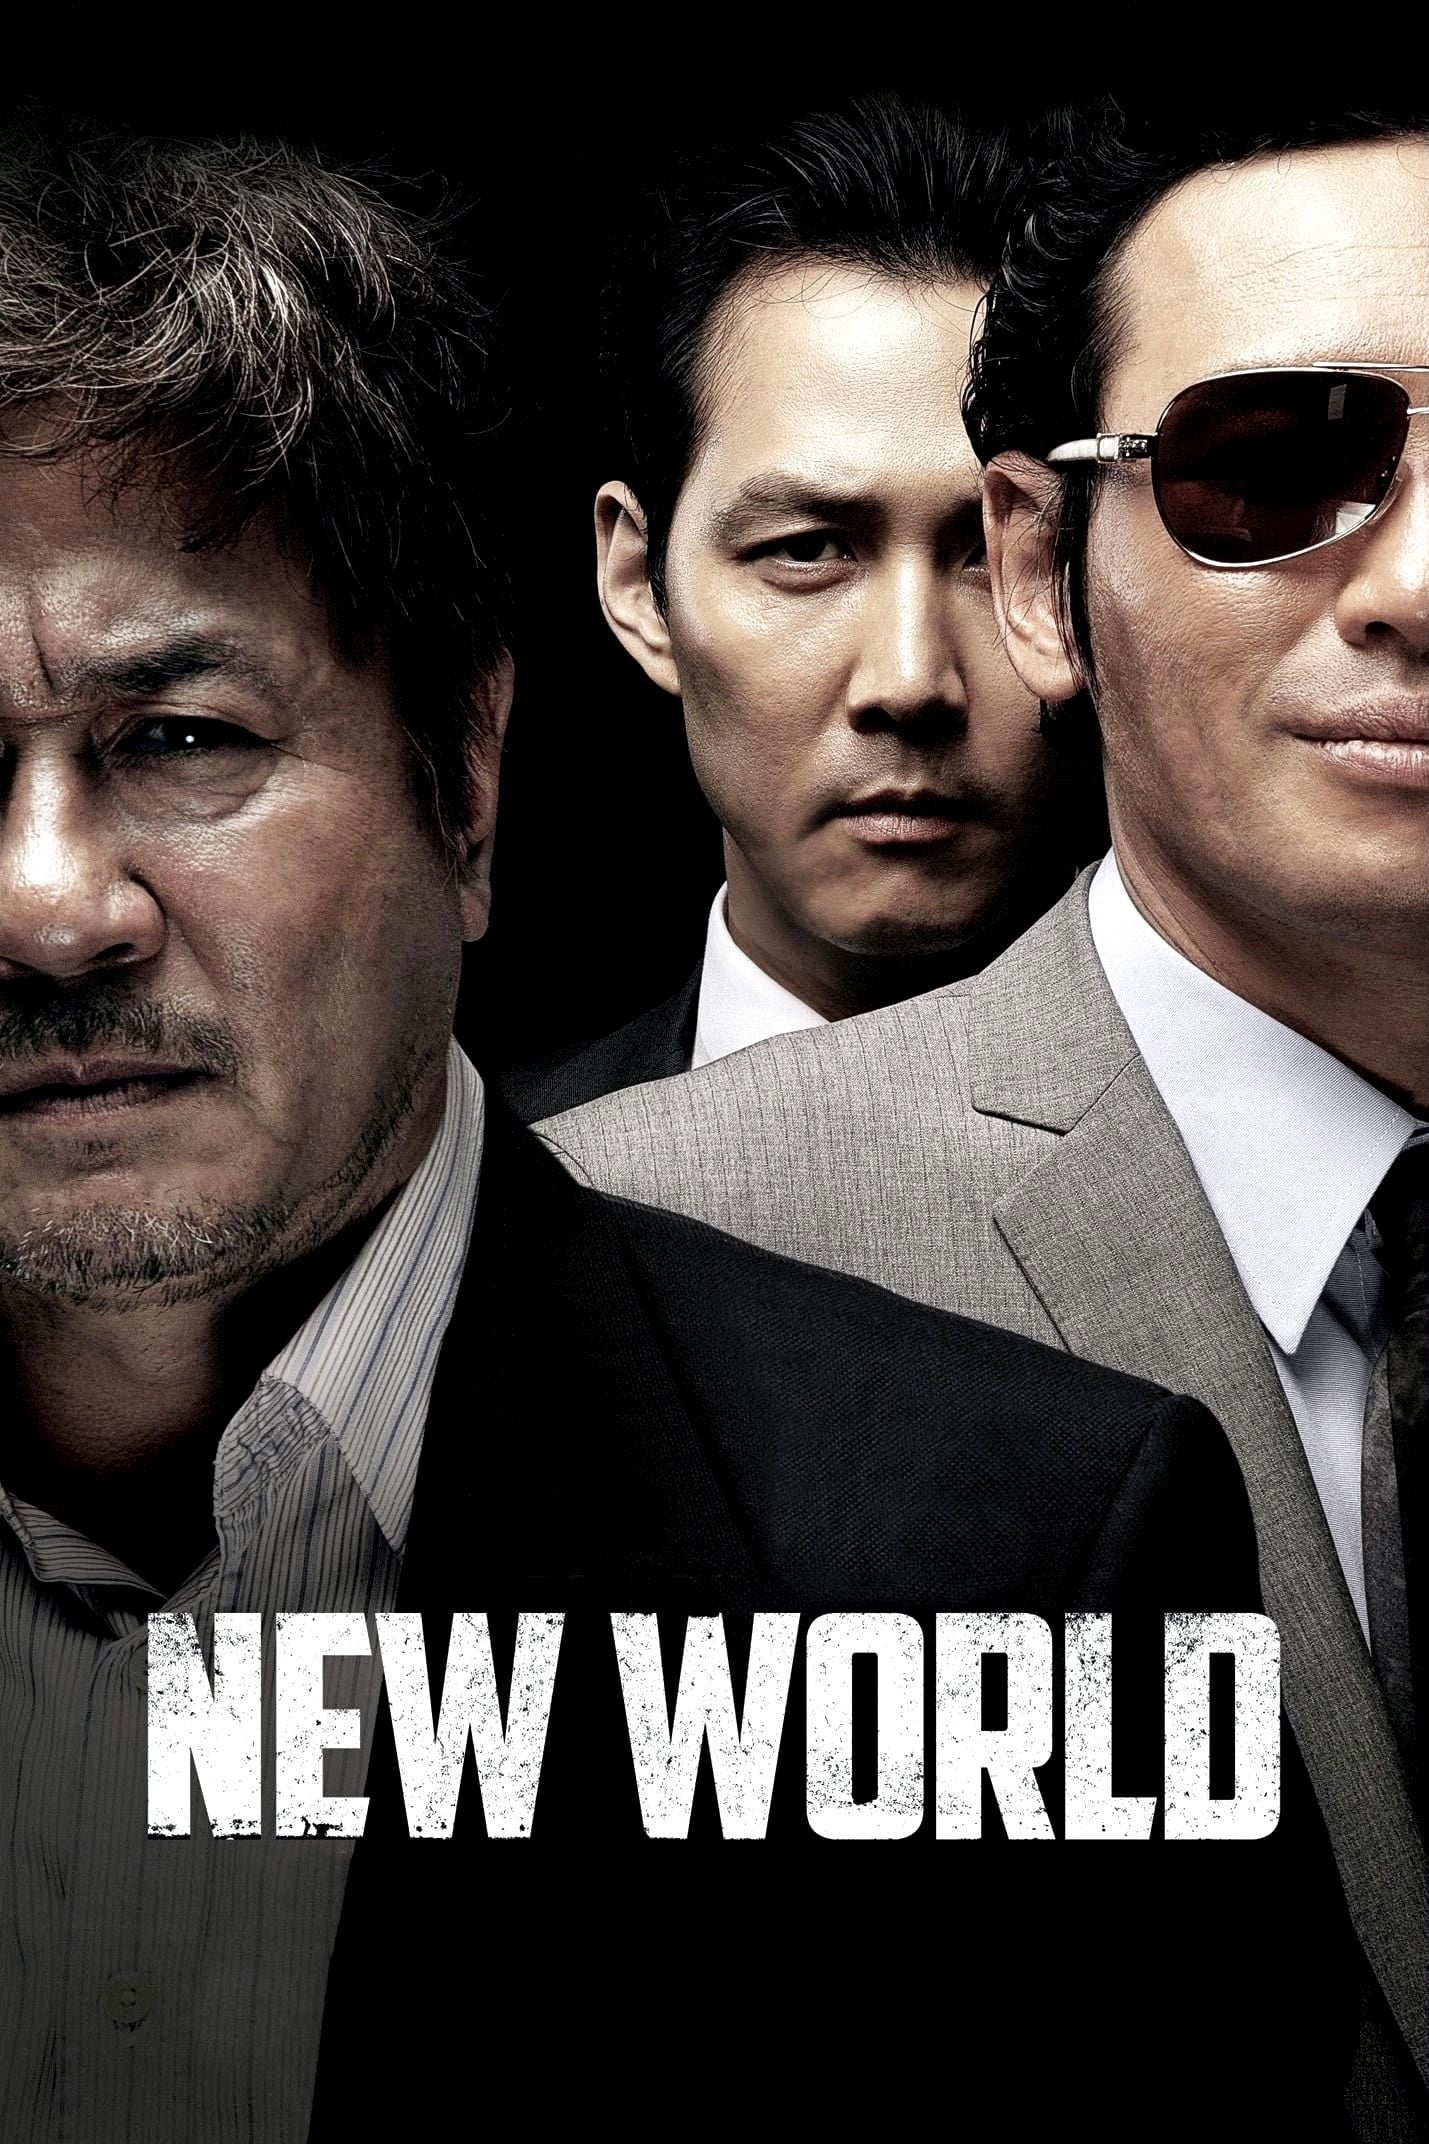 New World [Sub-ITA] (2013)